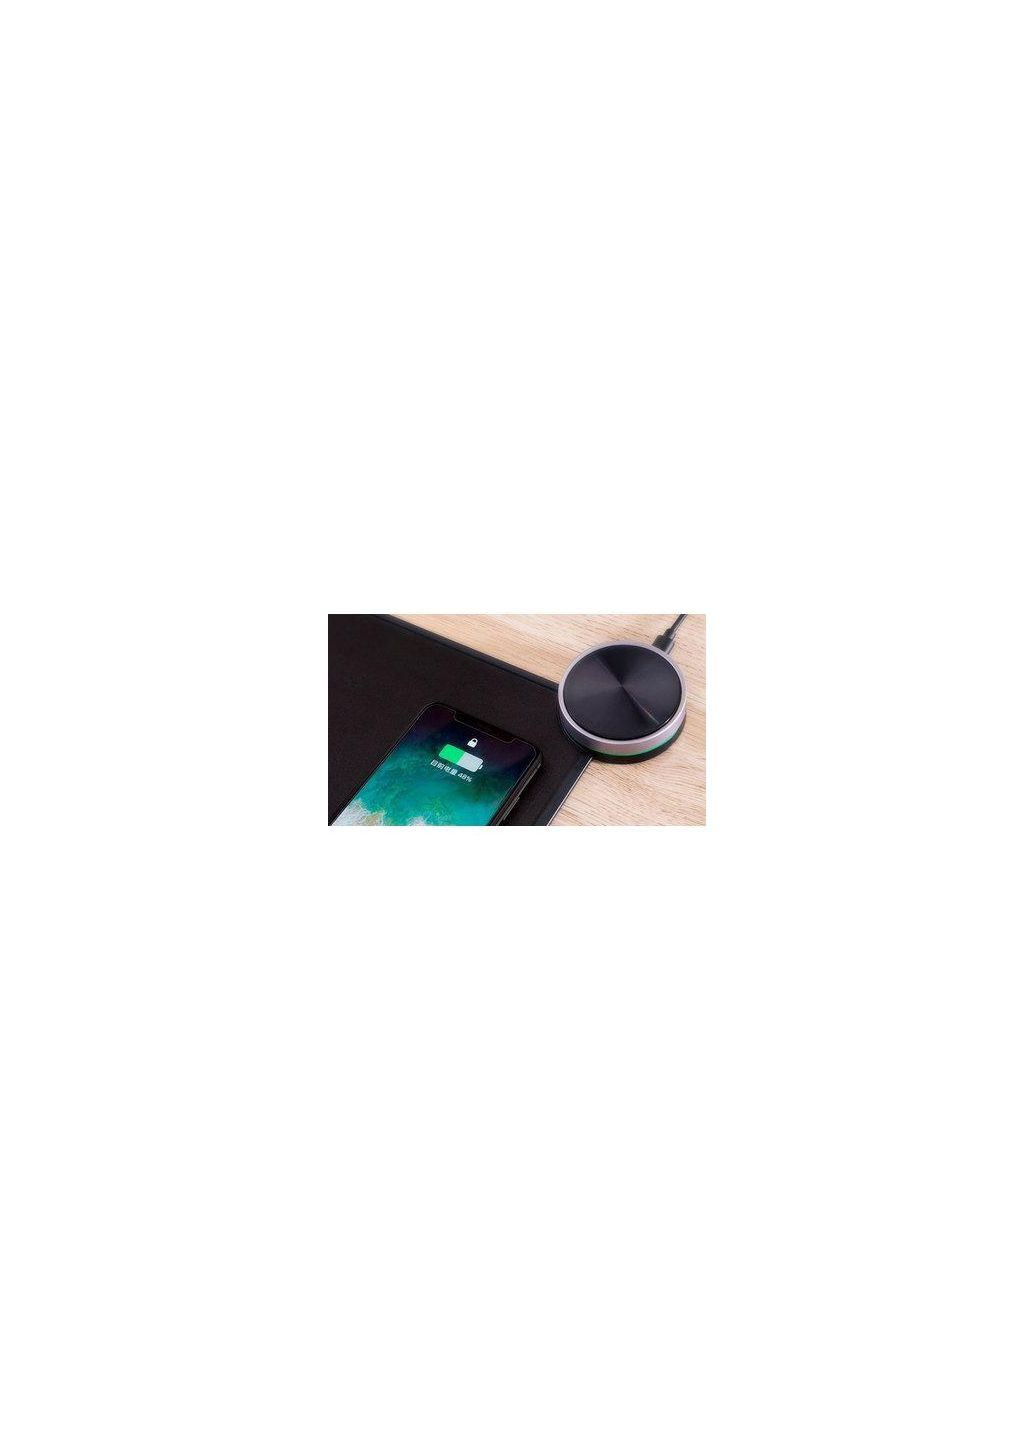 Коврик MiiiW Smart Mouse Pad Black MWPS01 Xiaomi (280876566)